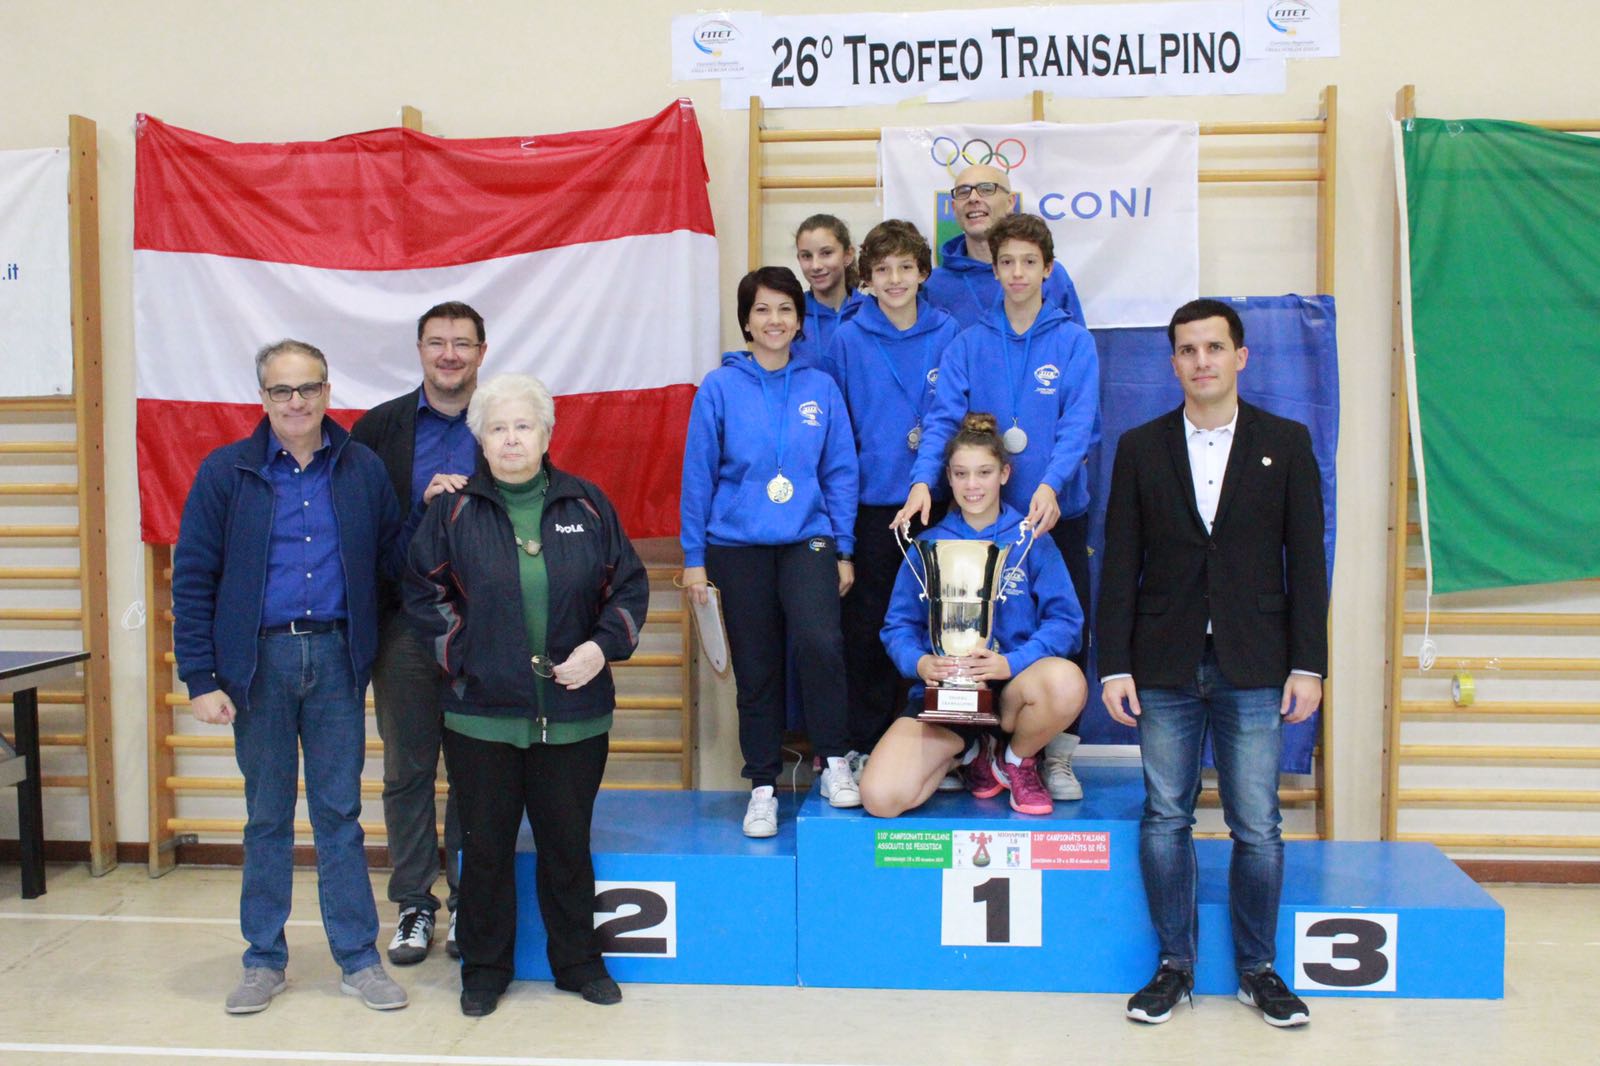 Torneo Transalpino 2017 vinto dal Piemonte